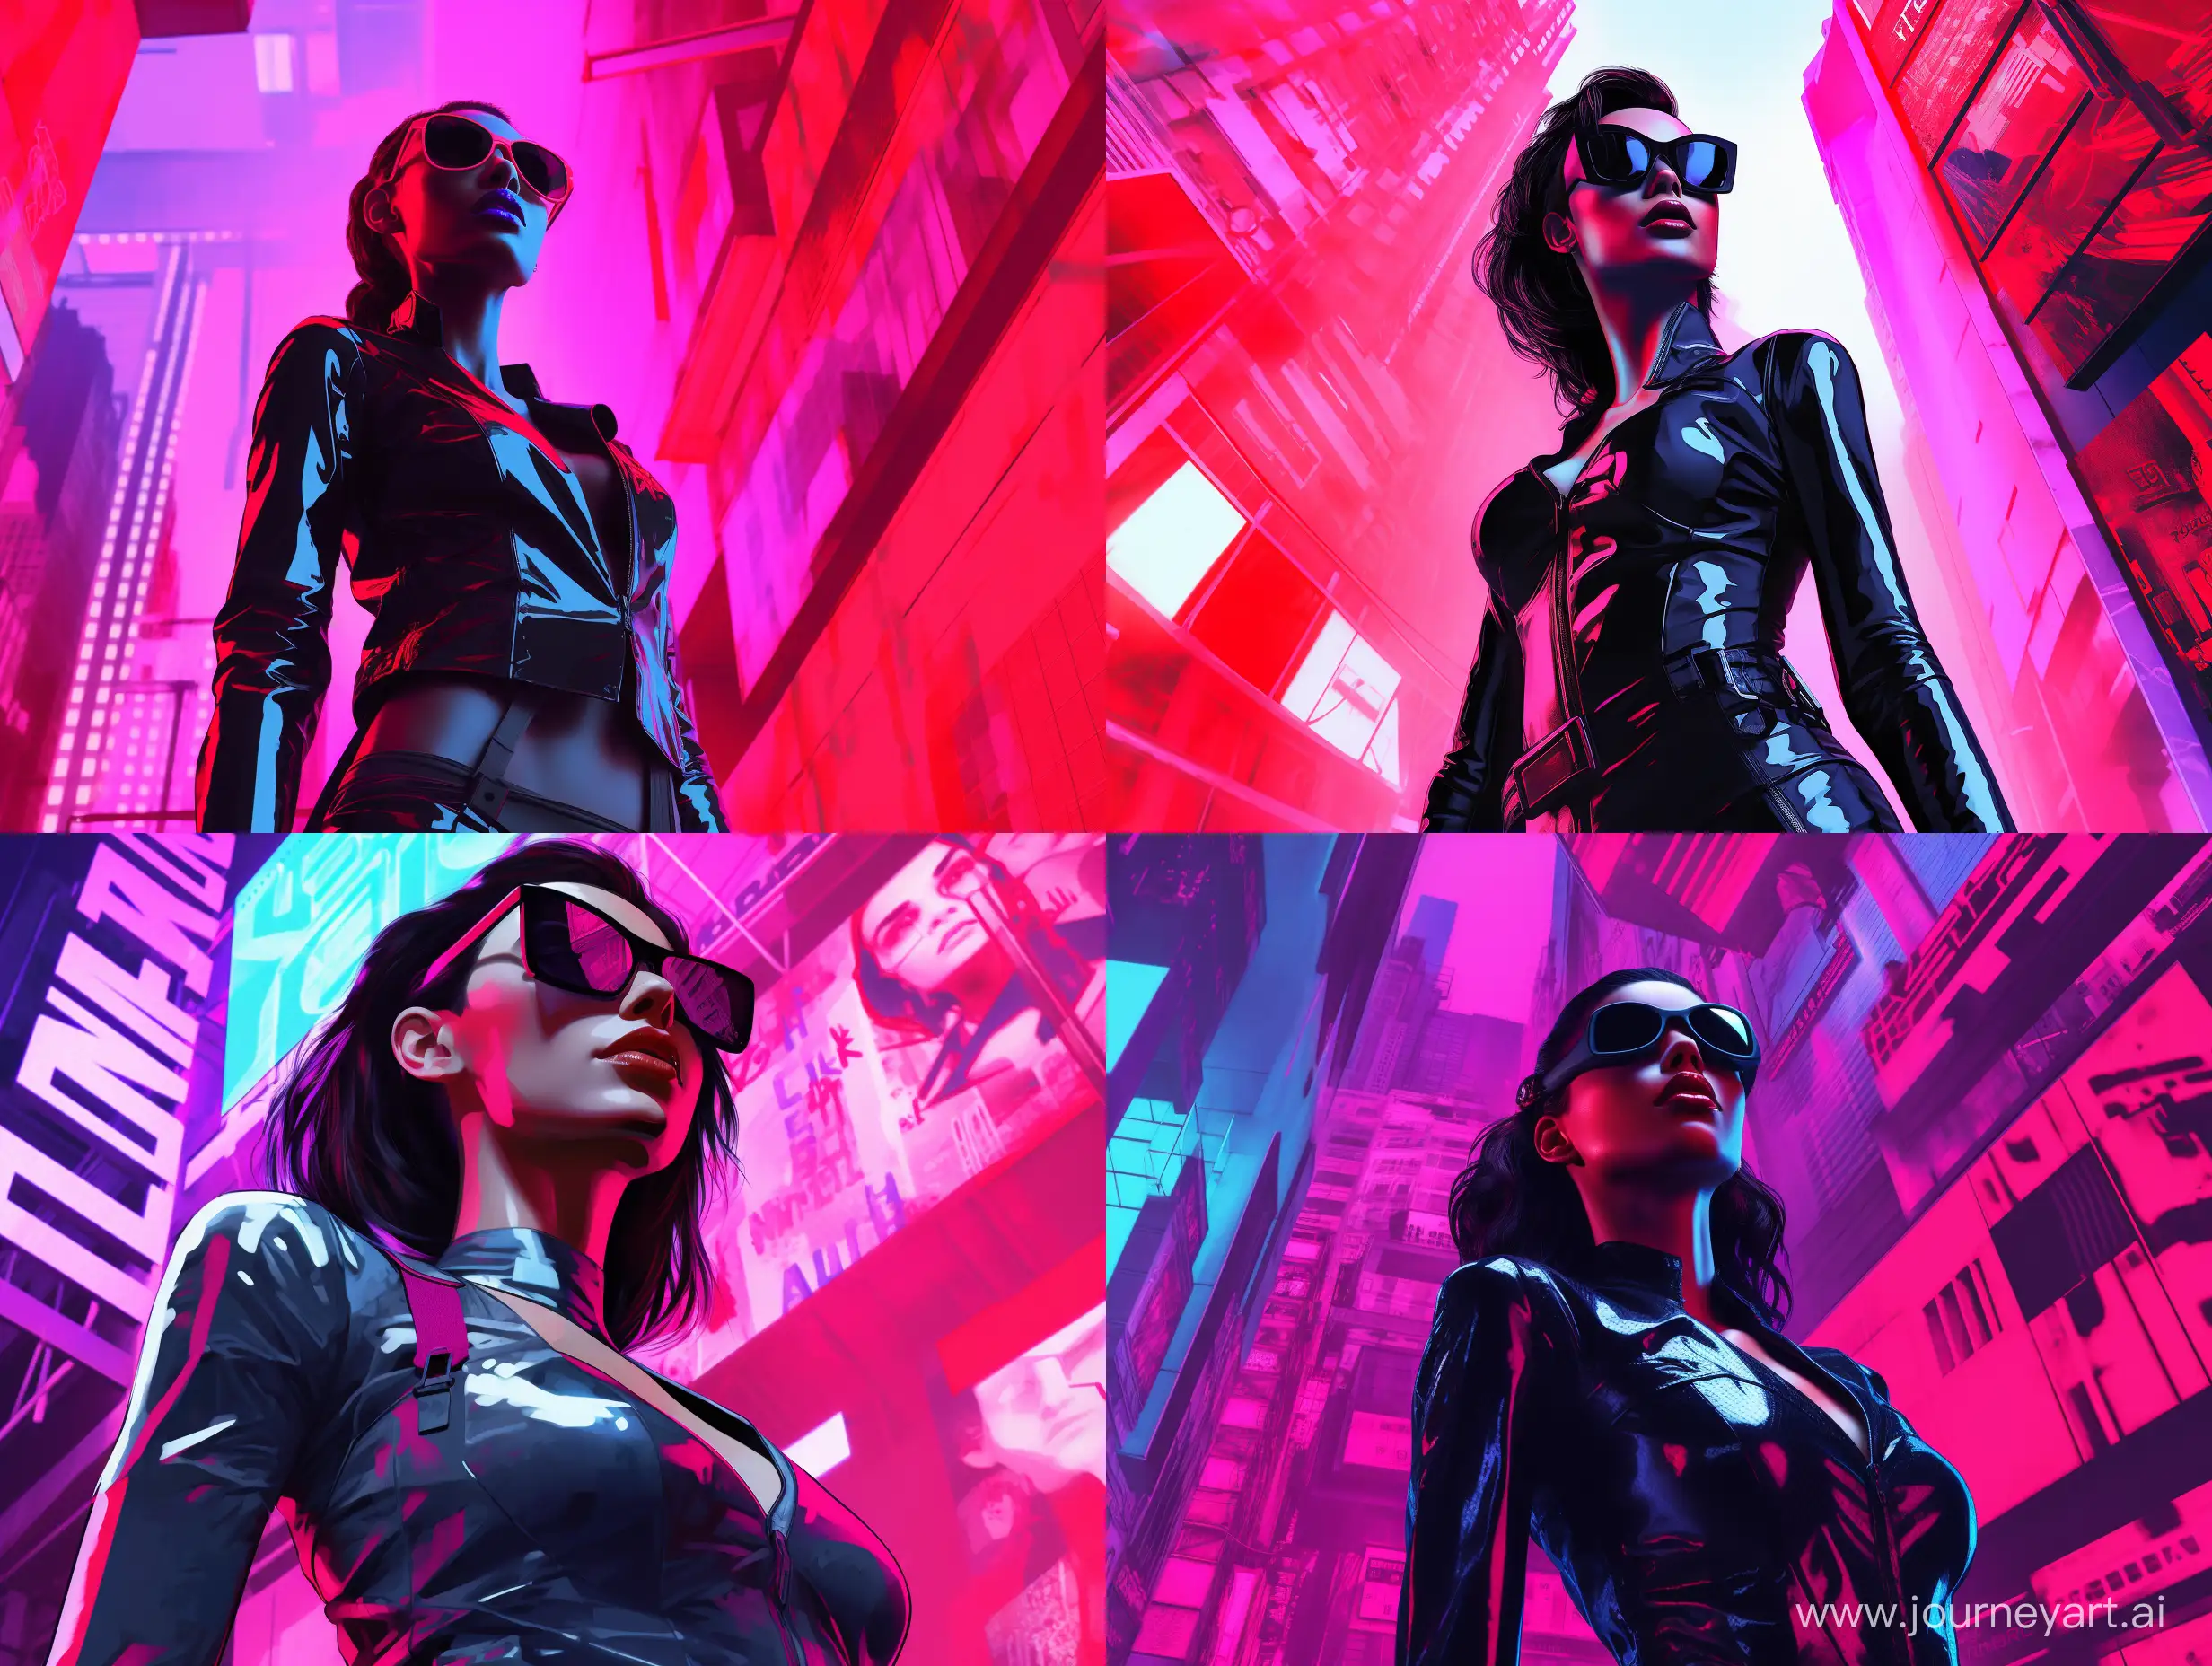 Futuristic-Cyberpunk-City-Model-Pose-with-Neon-Lights-Synthwave-Art